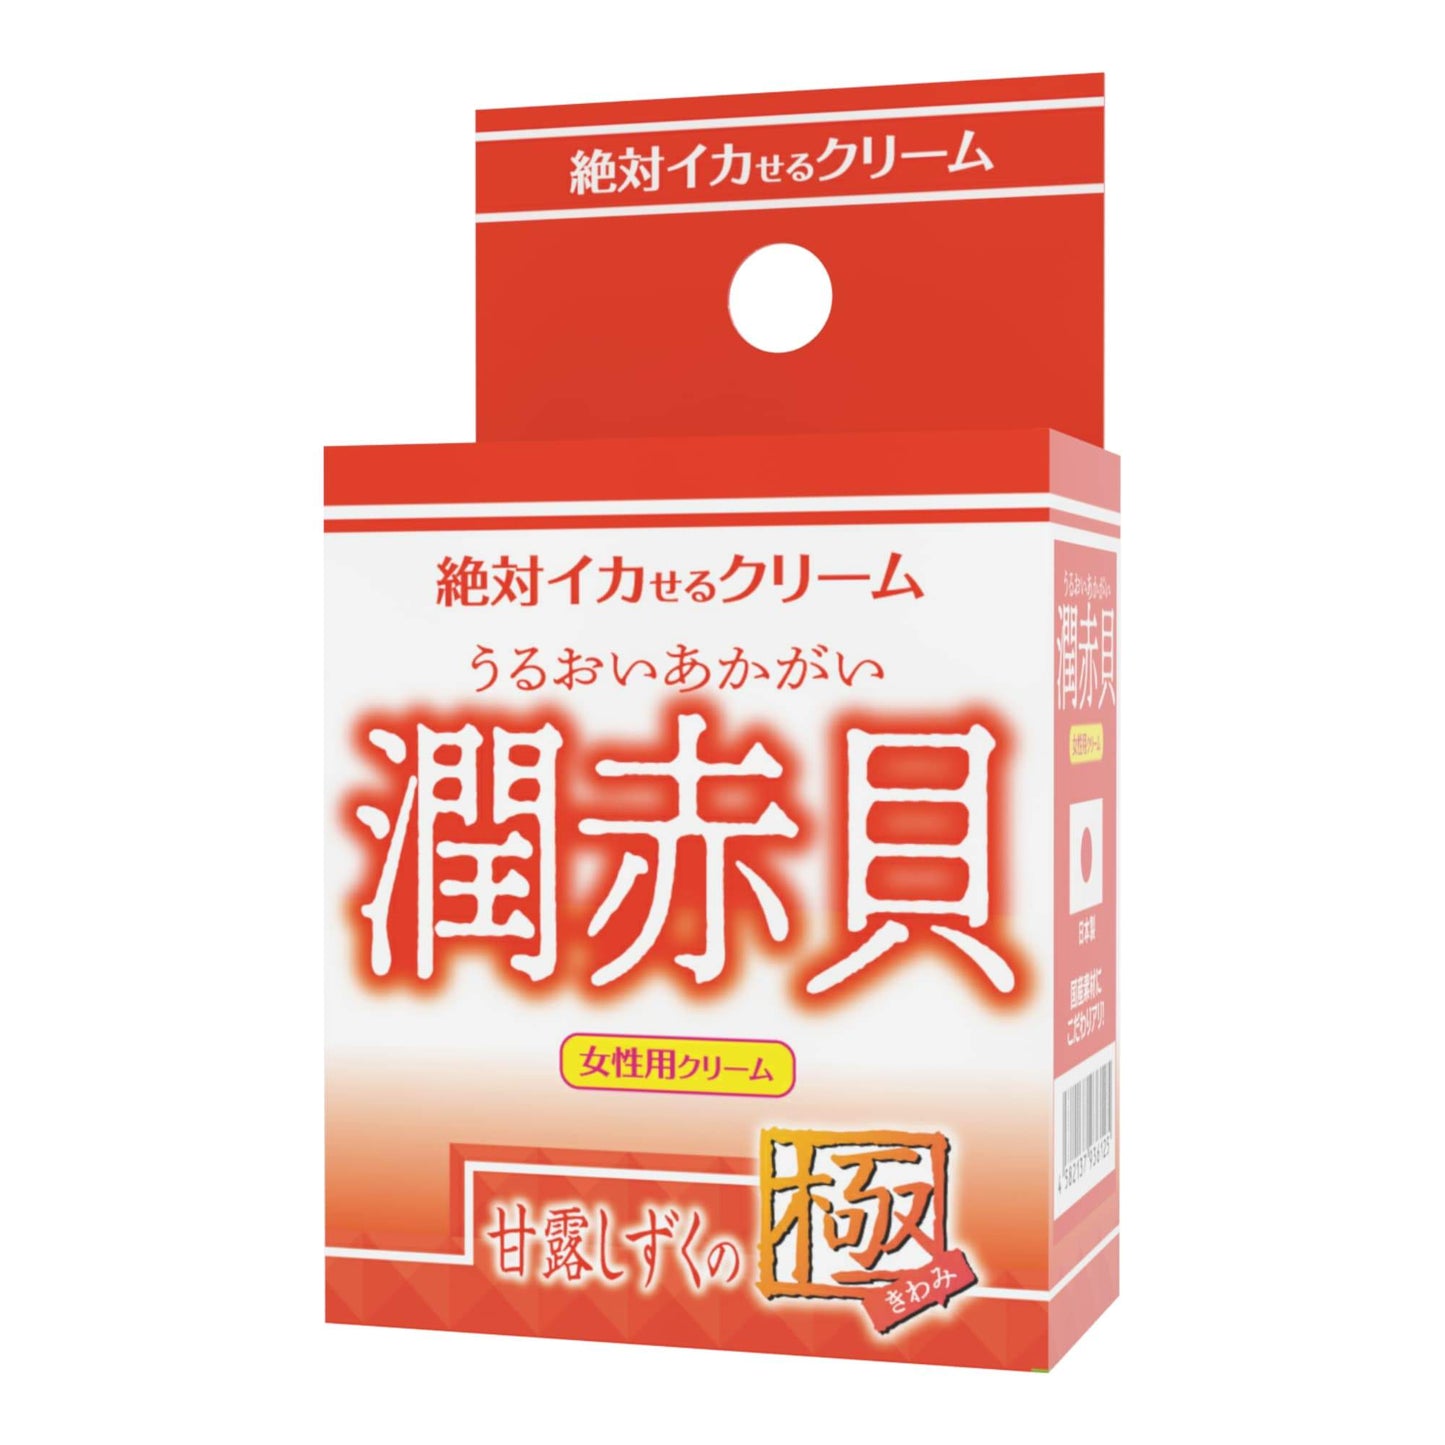 SSI JAPAN 【女性用】絕對潮吹乳霜 潤赤貝 甘露の極 高潮興奮液 購買